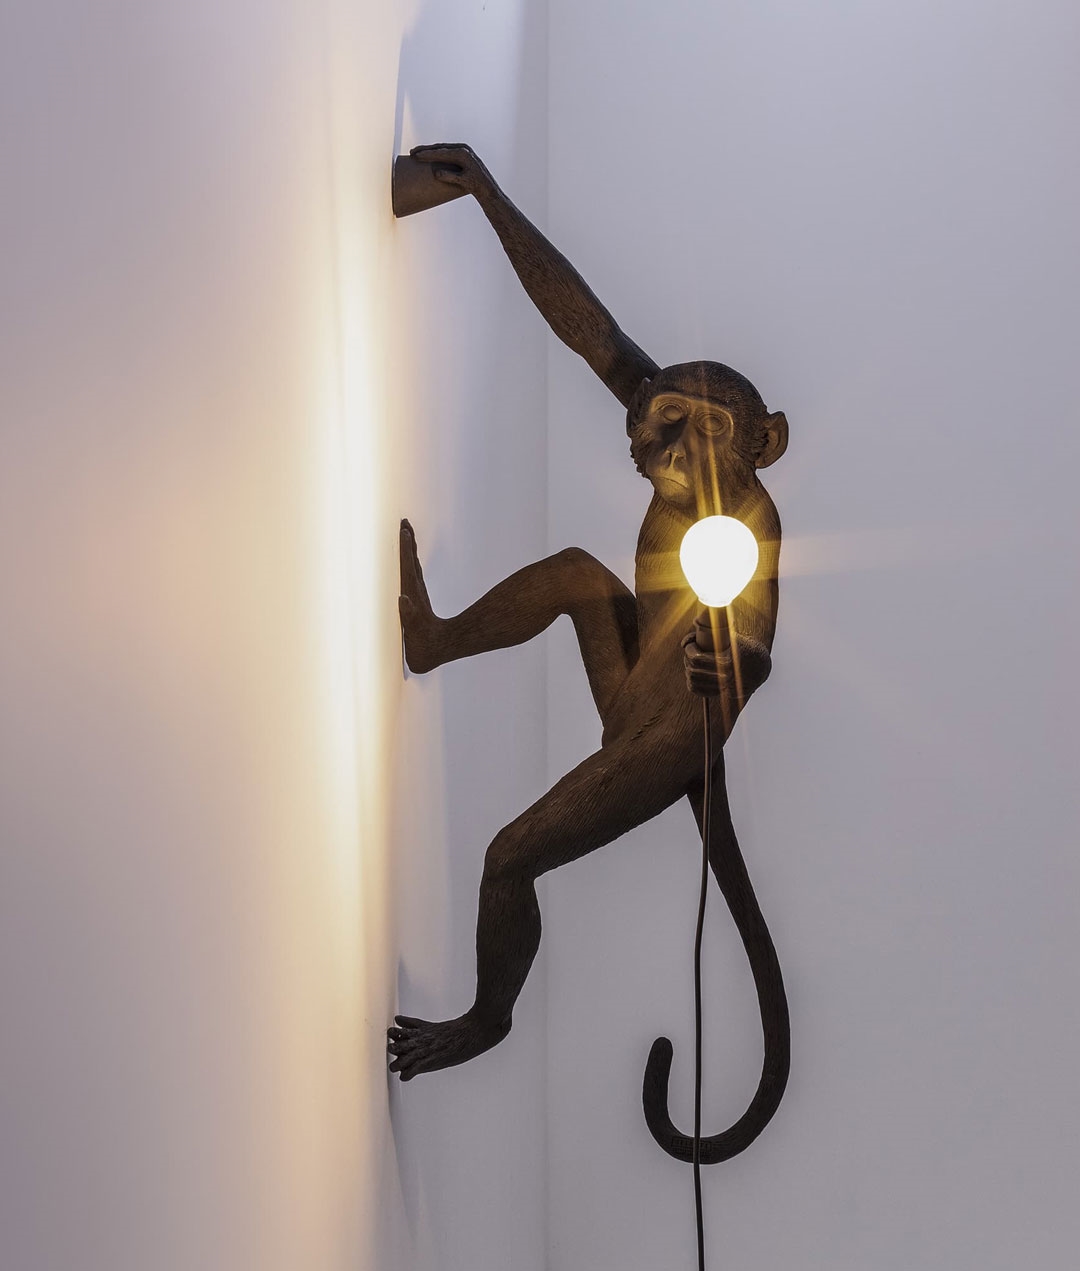 LED Lamp Monkey Wall Light from Seletti